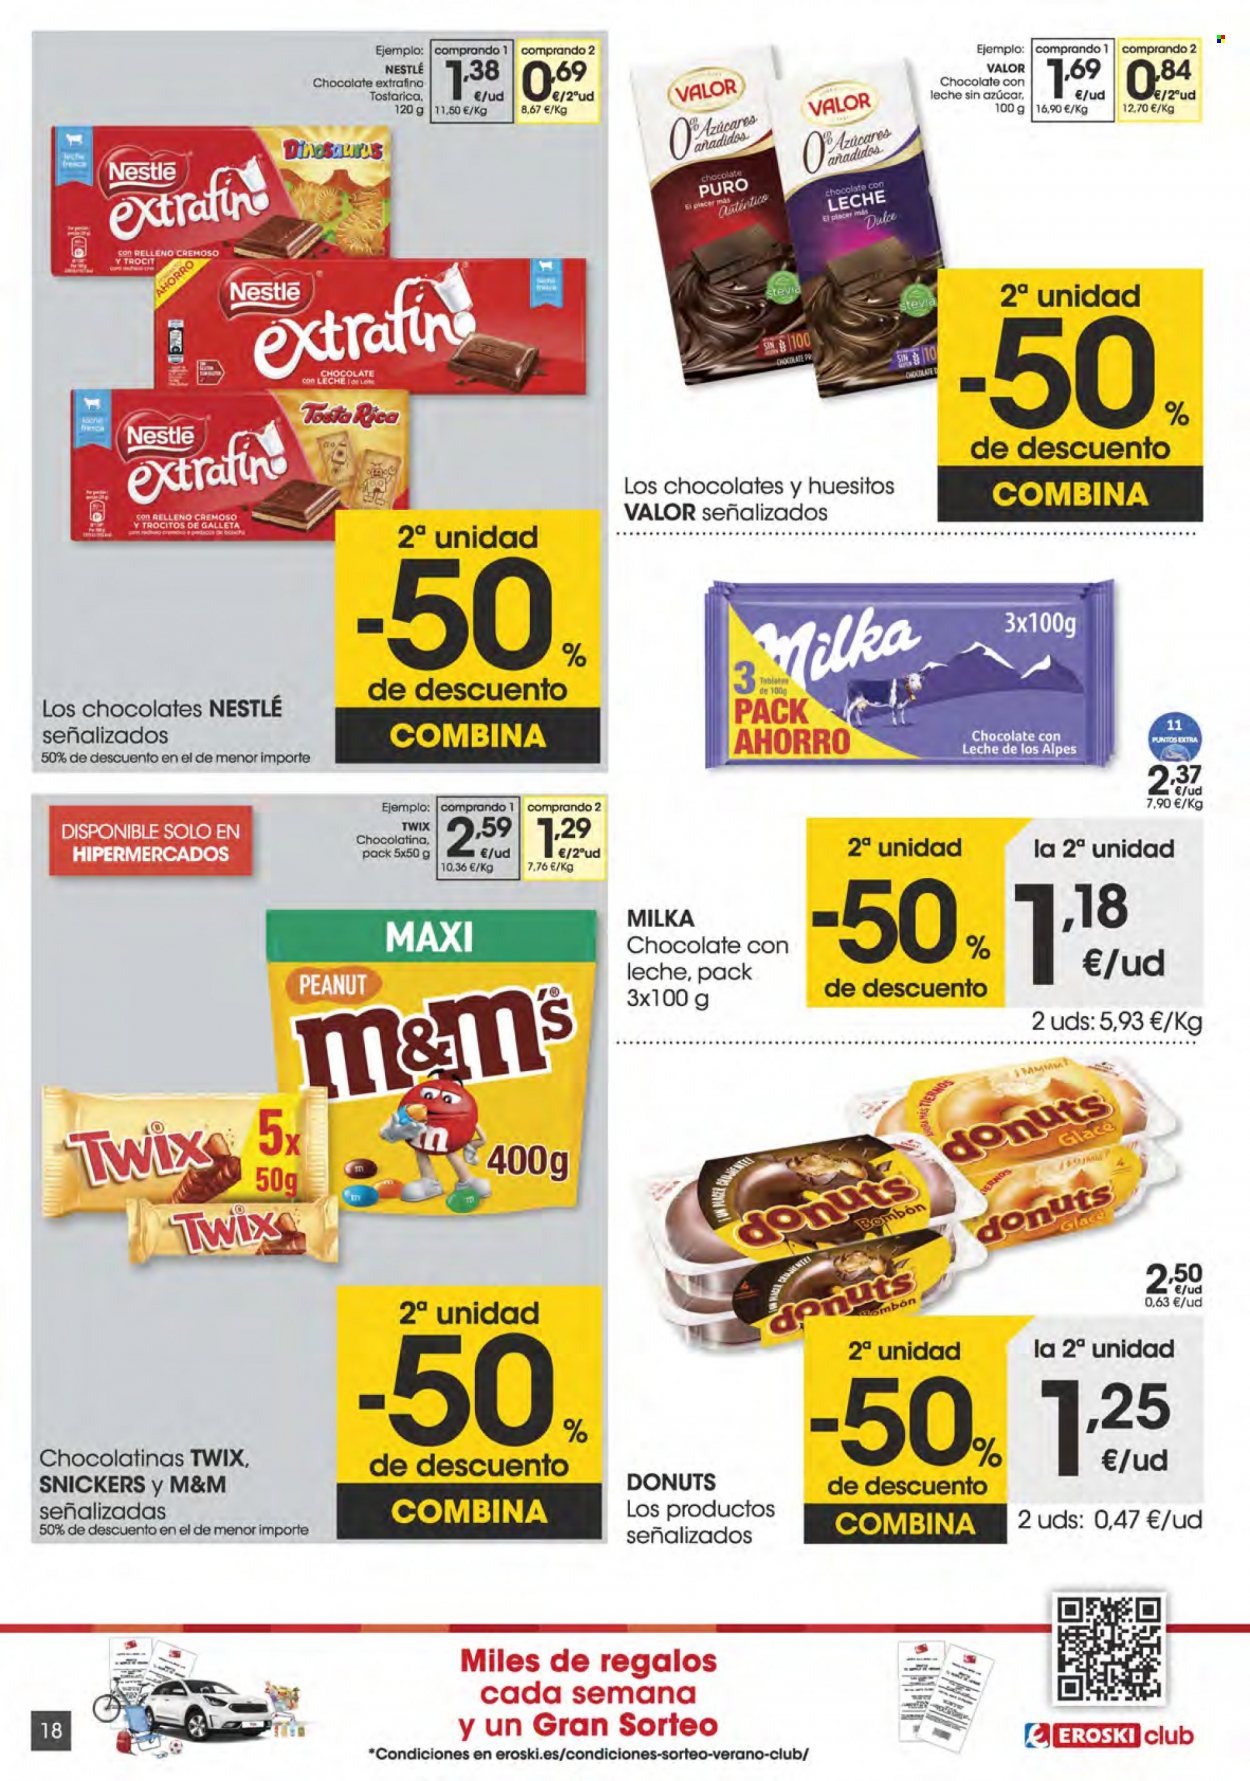 thumbnail - Folleto actual Eroski - 16/06/22 - 28/06/22 - Ventas - donut, Milka, Nestlé, chocolate, galletas, bombones, M&M's, Snickers, Twix, chocolatina. Página 18.